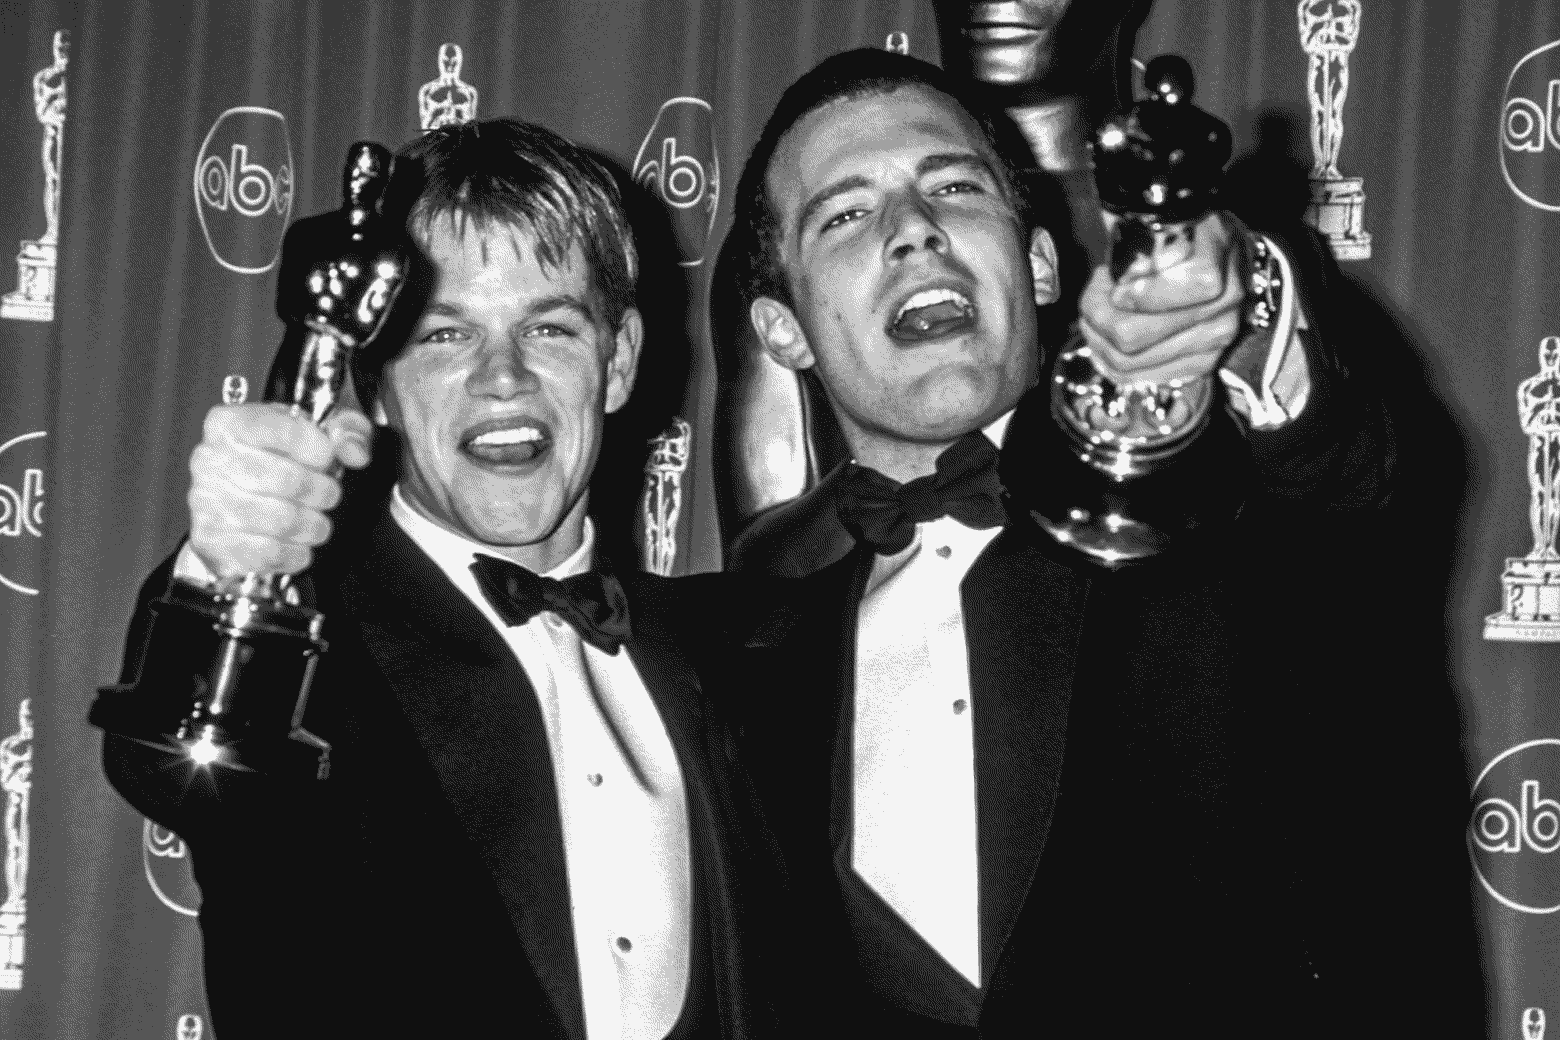 Matt Damon and Ben Affleck winning an Oscar, and clearly cursed.